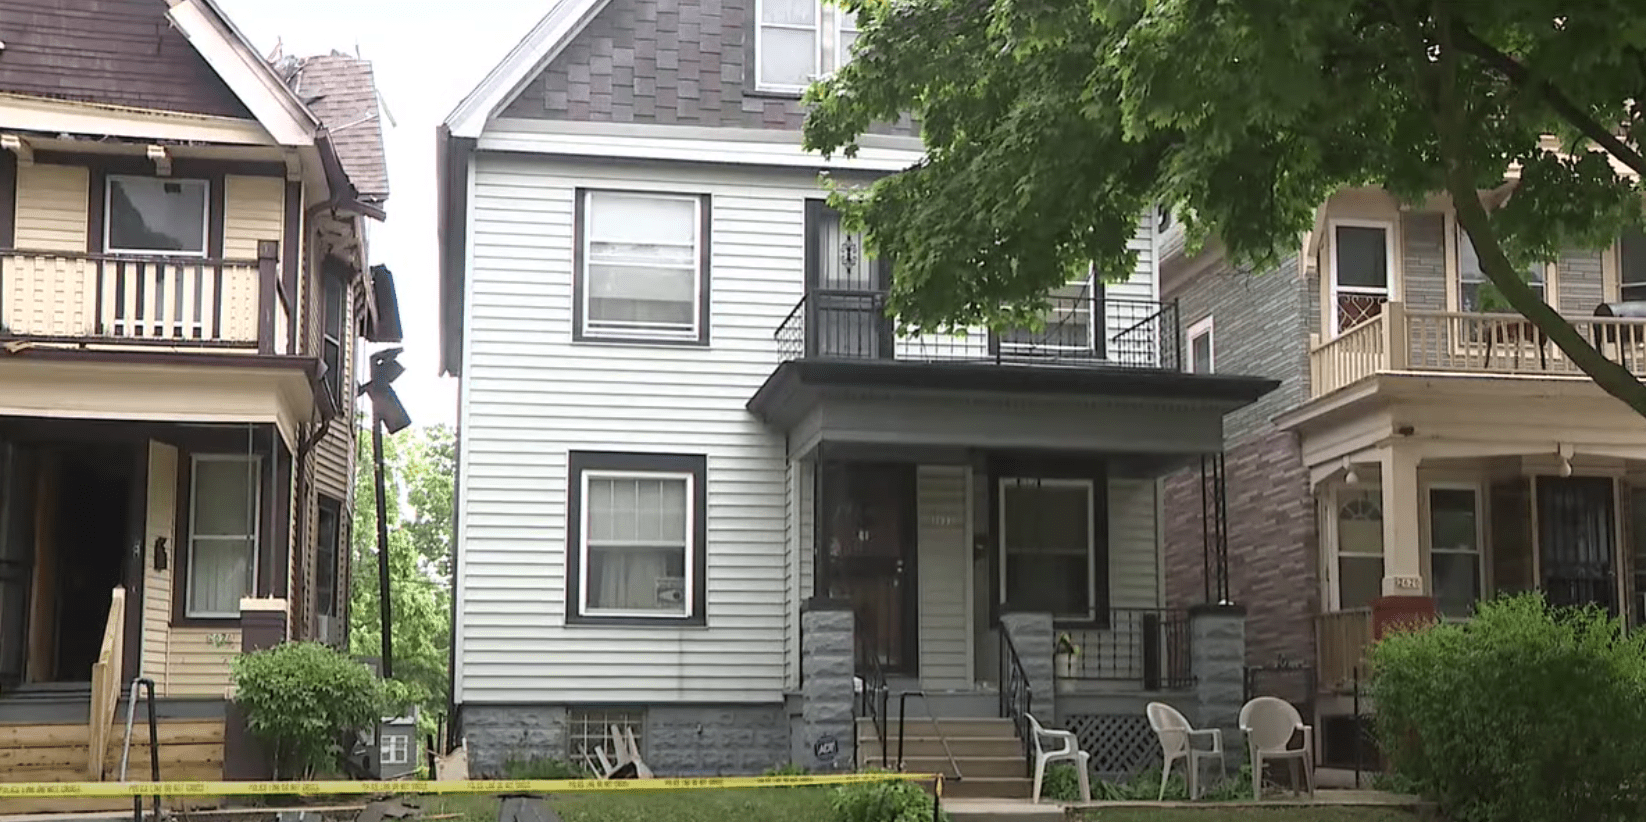 The family's neighborhood. | Source: Youtube.com/FOX6 News Milwaukee